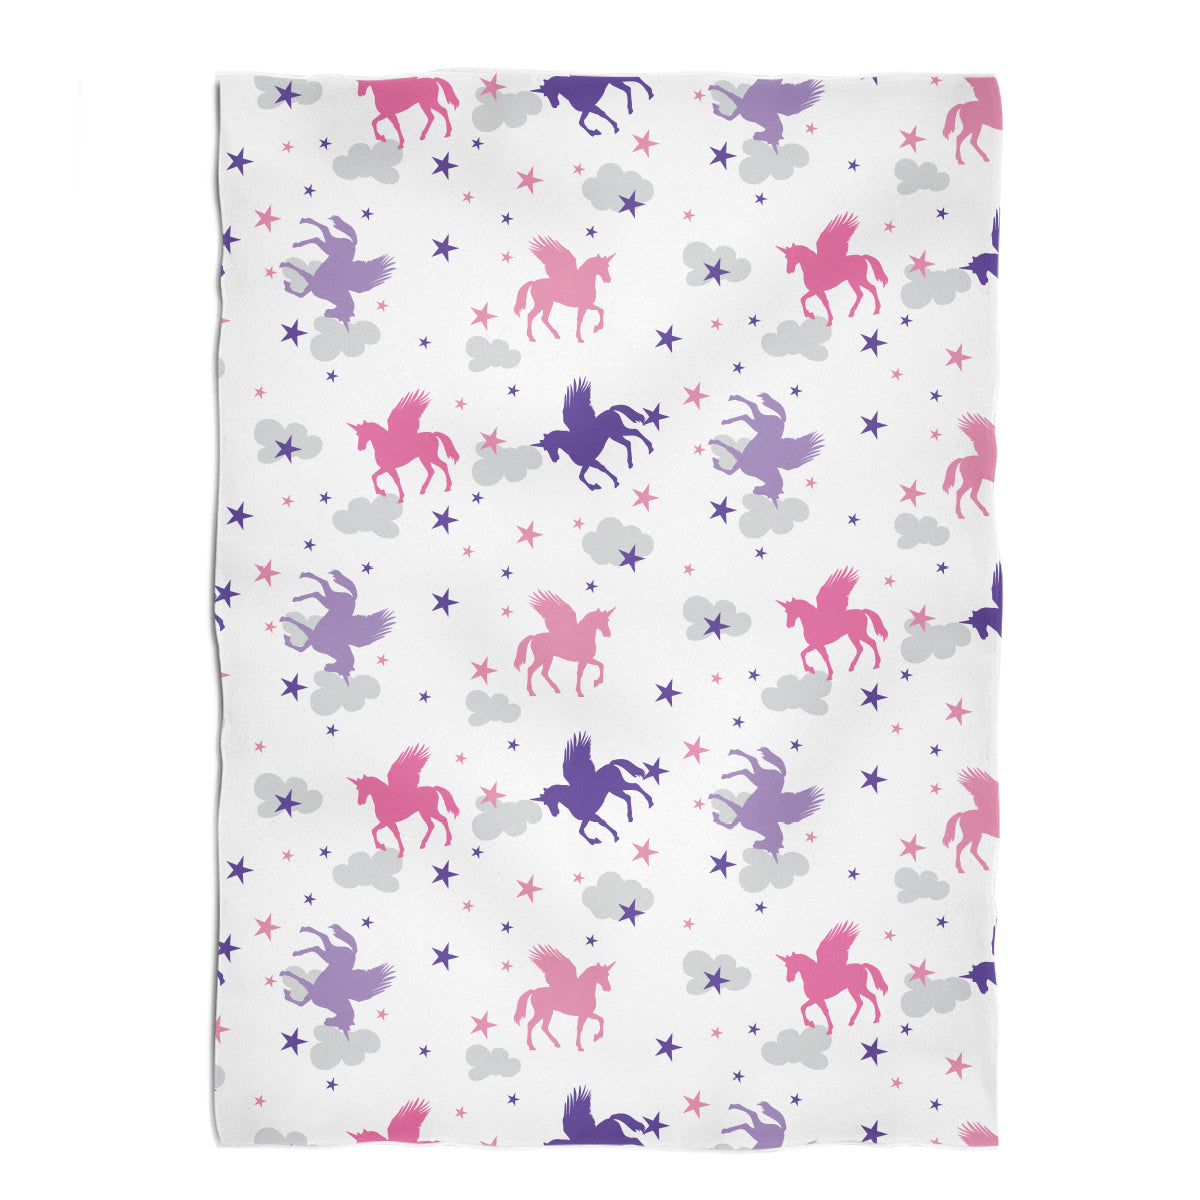 Unicorn Clouds Stars White Purple and Pink Fleece Blanket 40 x 58""